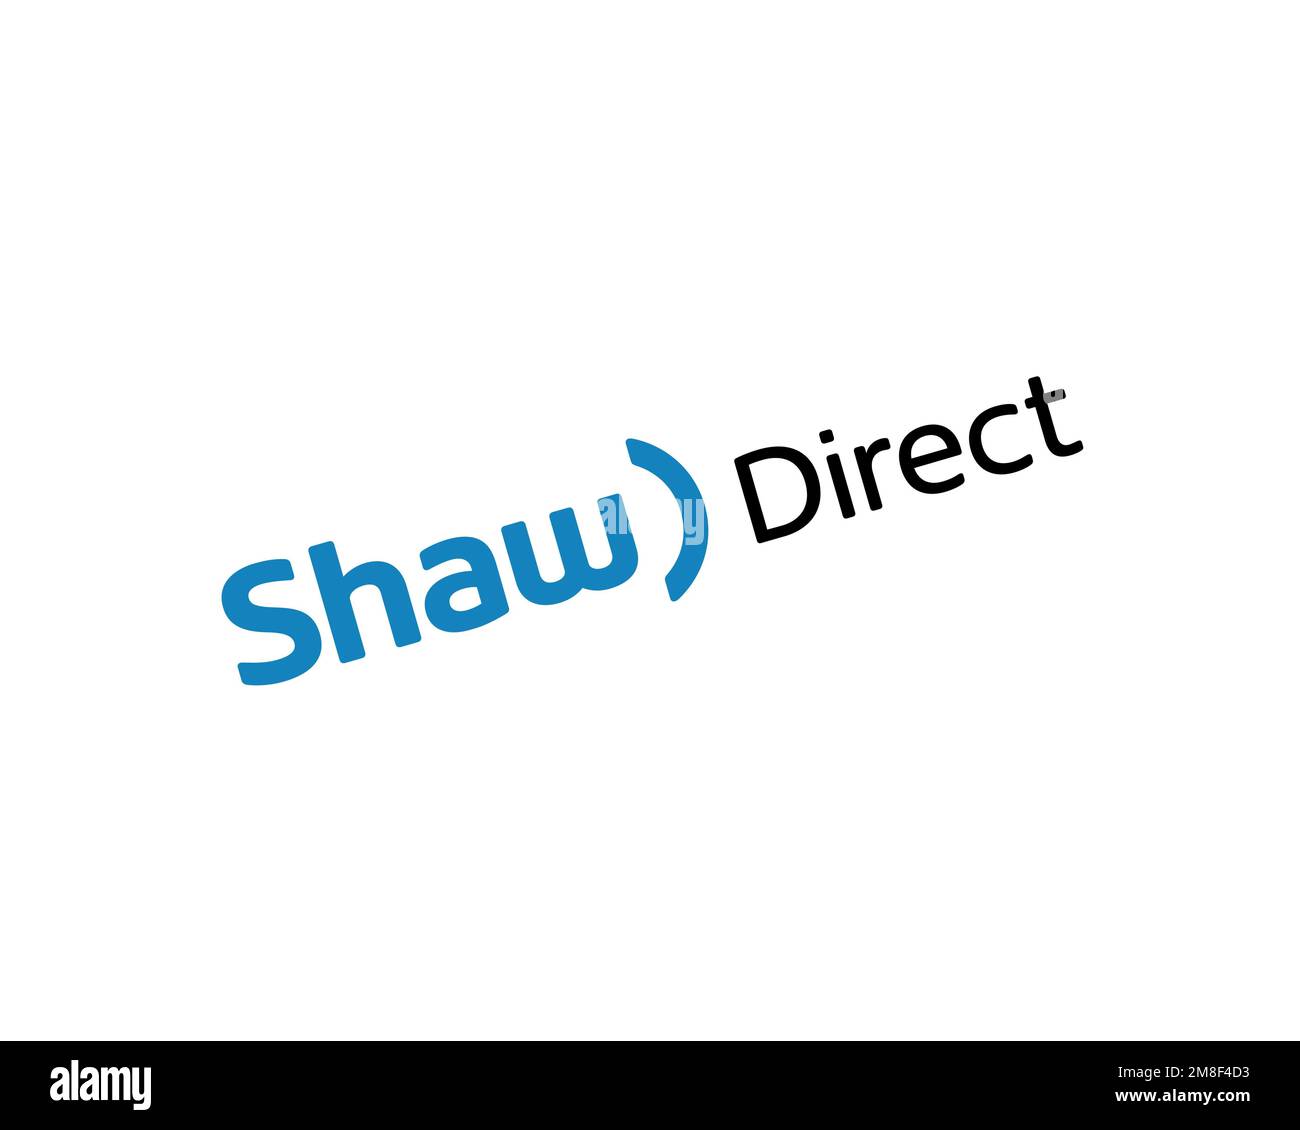 Shaw Direct, Rotated Logo, White Background Stock Photo